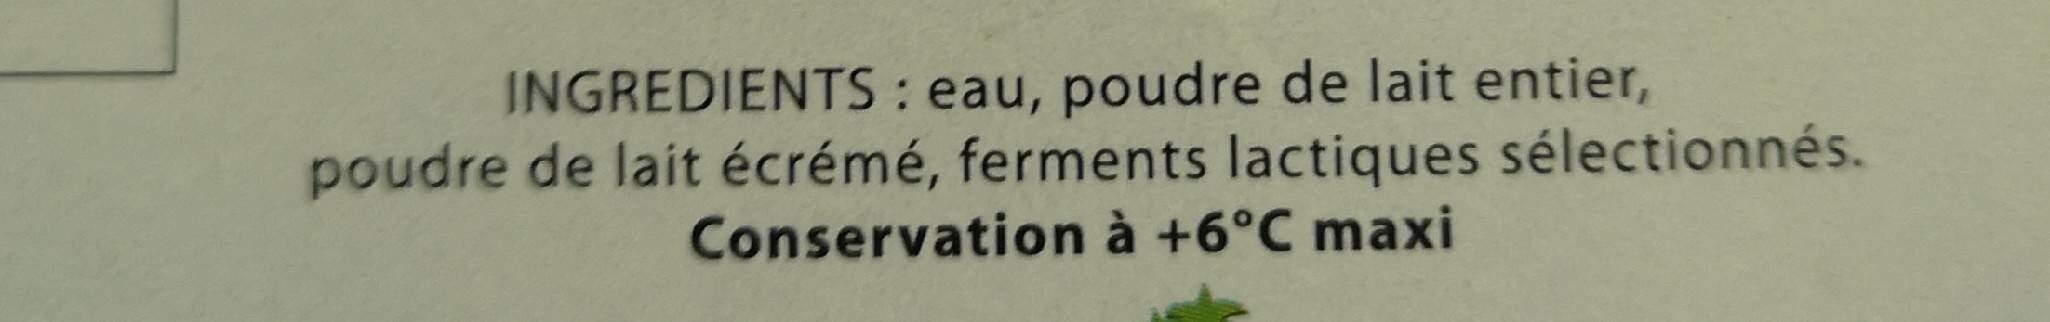 Yayourt brassé nature - Ingredients - fr